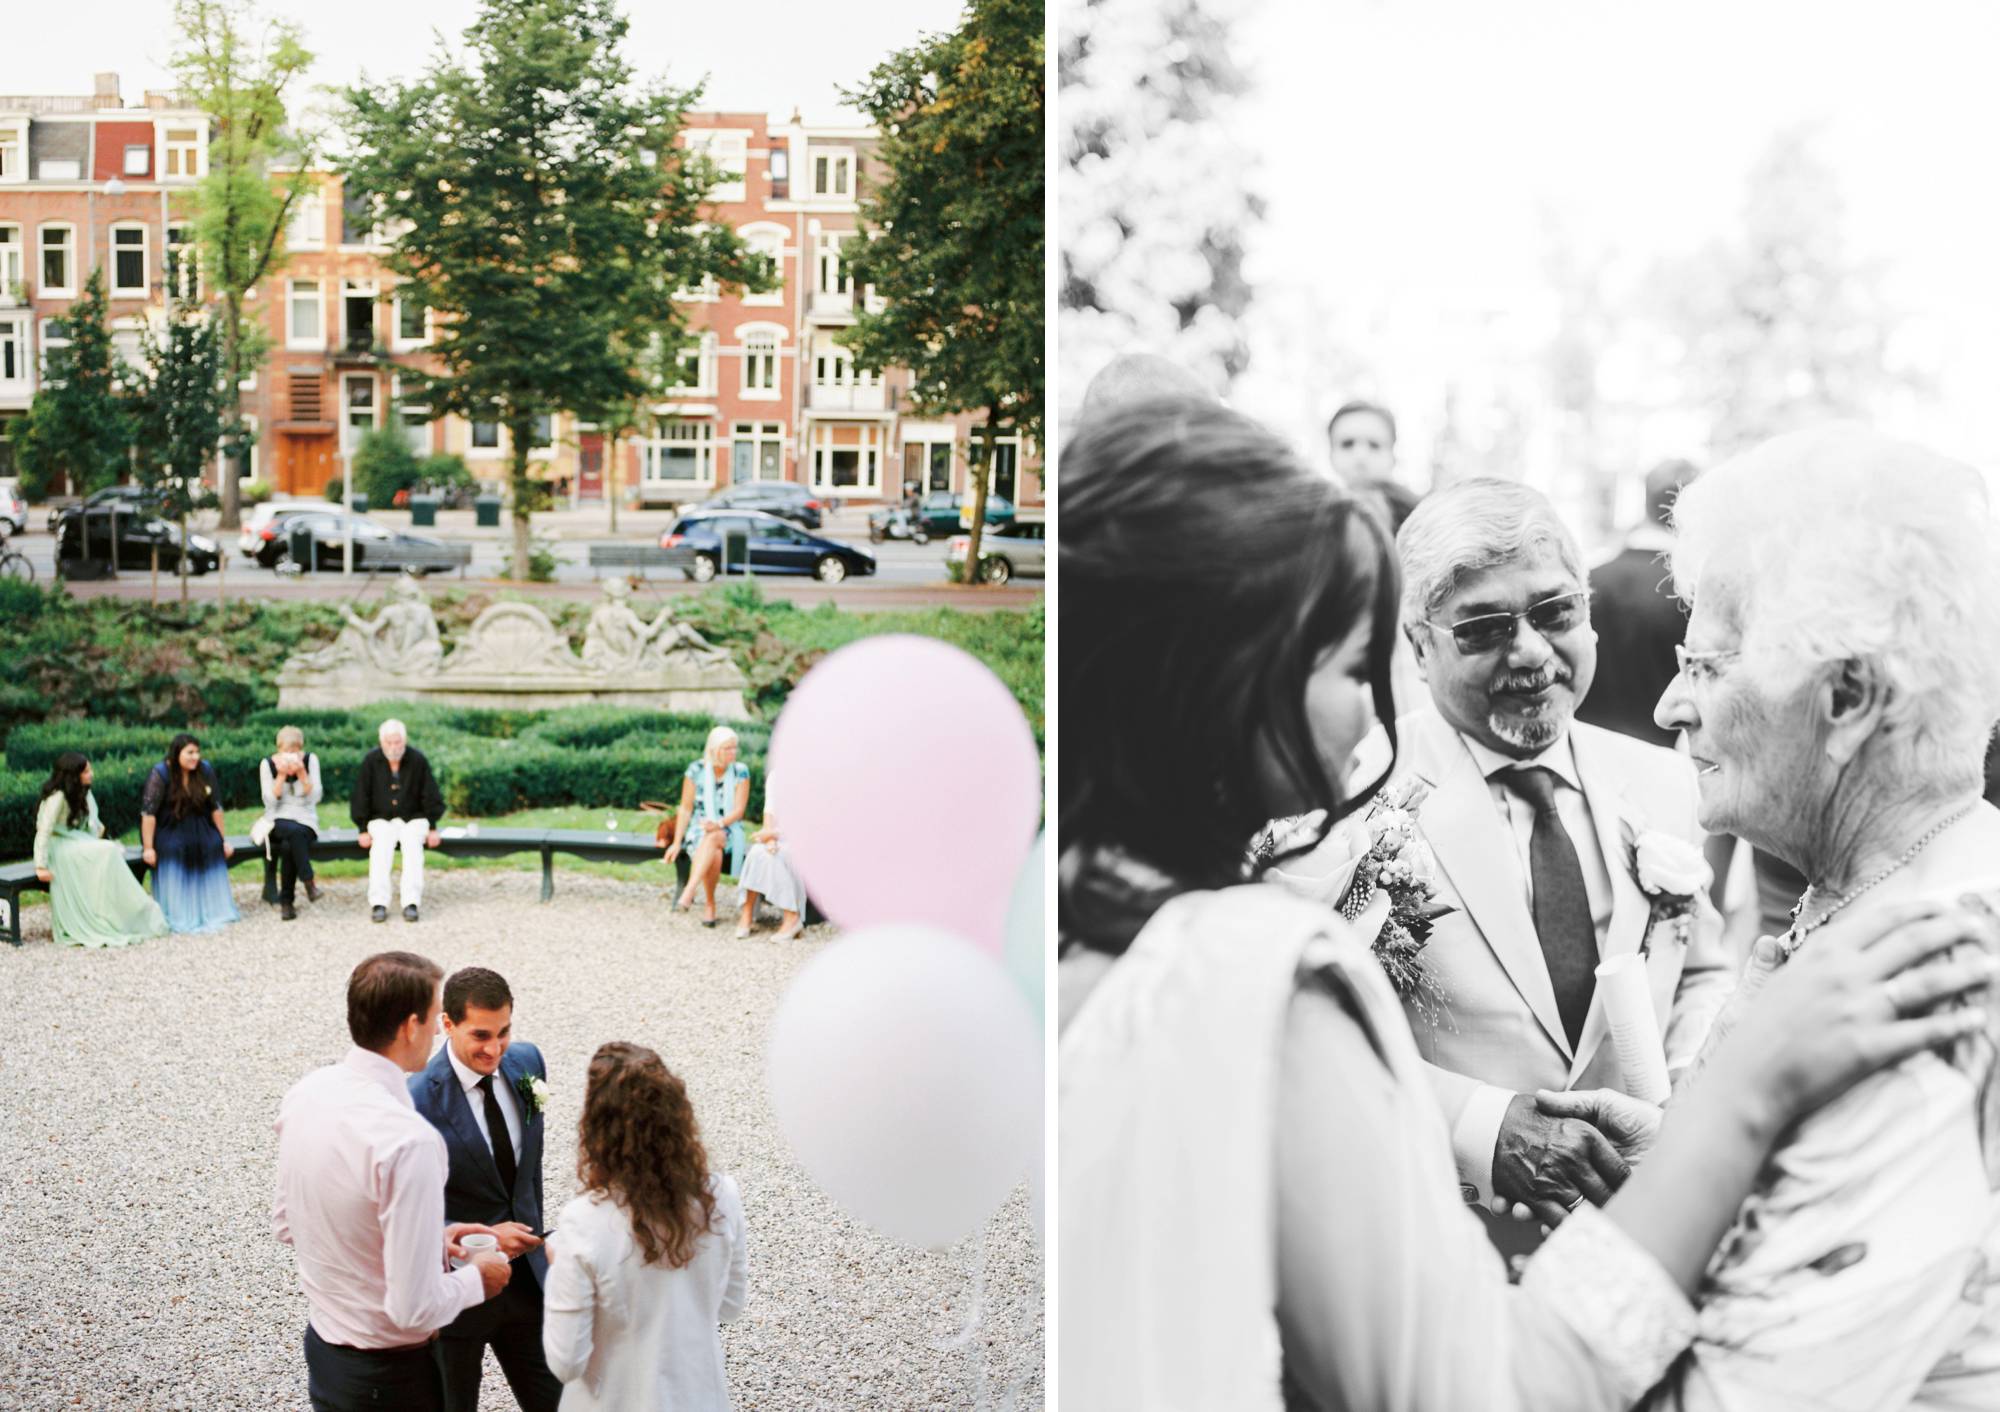 Wedding photographer Frankendael Amsterdam - Wedding guests